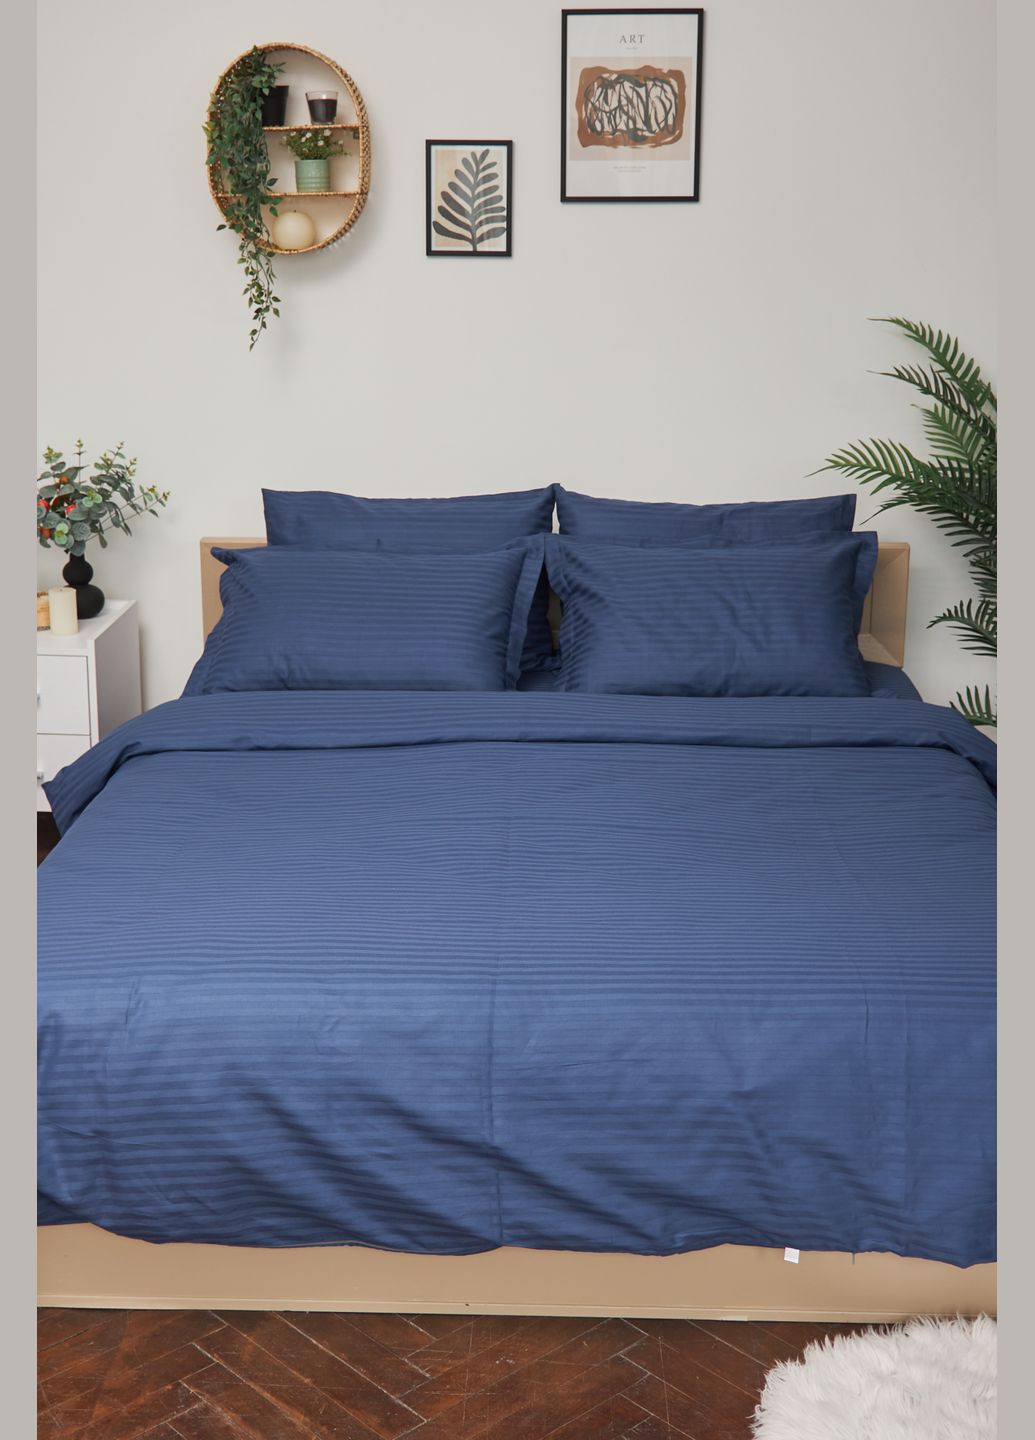 Комплект постельного белья полуторный евро 160х220 наволочки 2х70х70 Satin Stripe (MS-820000512) Moon&Star delfi blue (284416169)